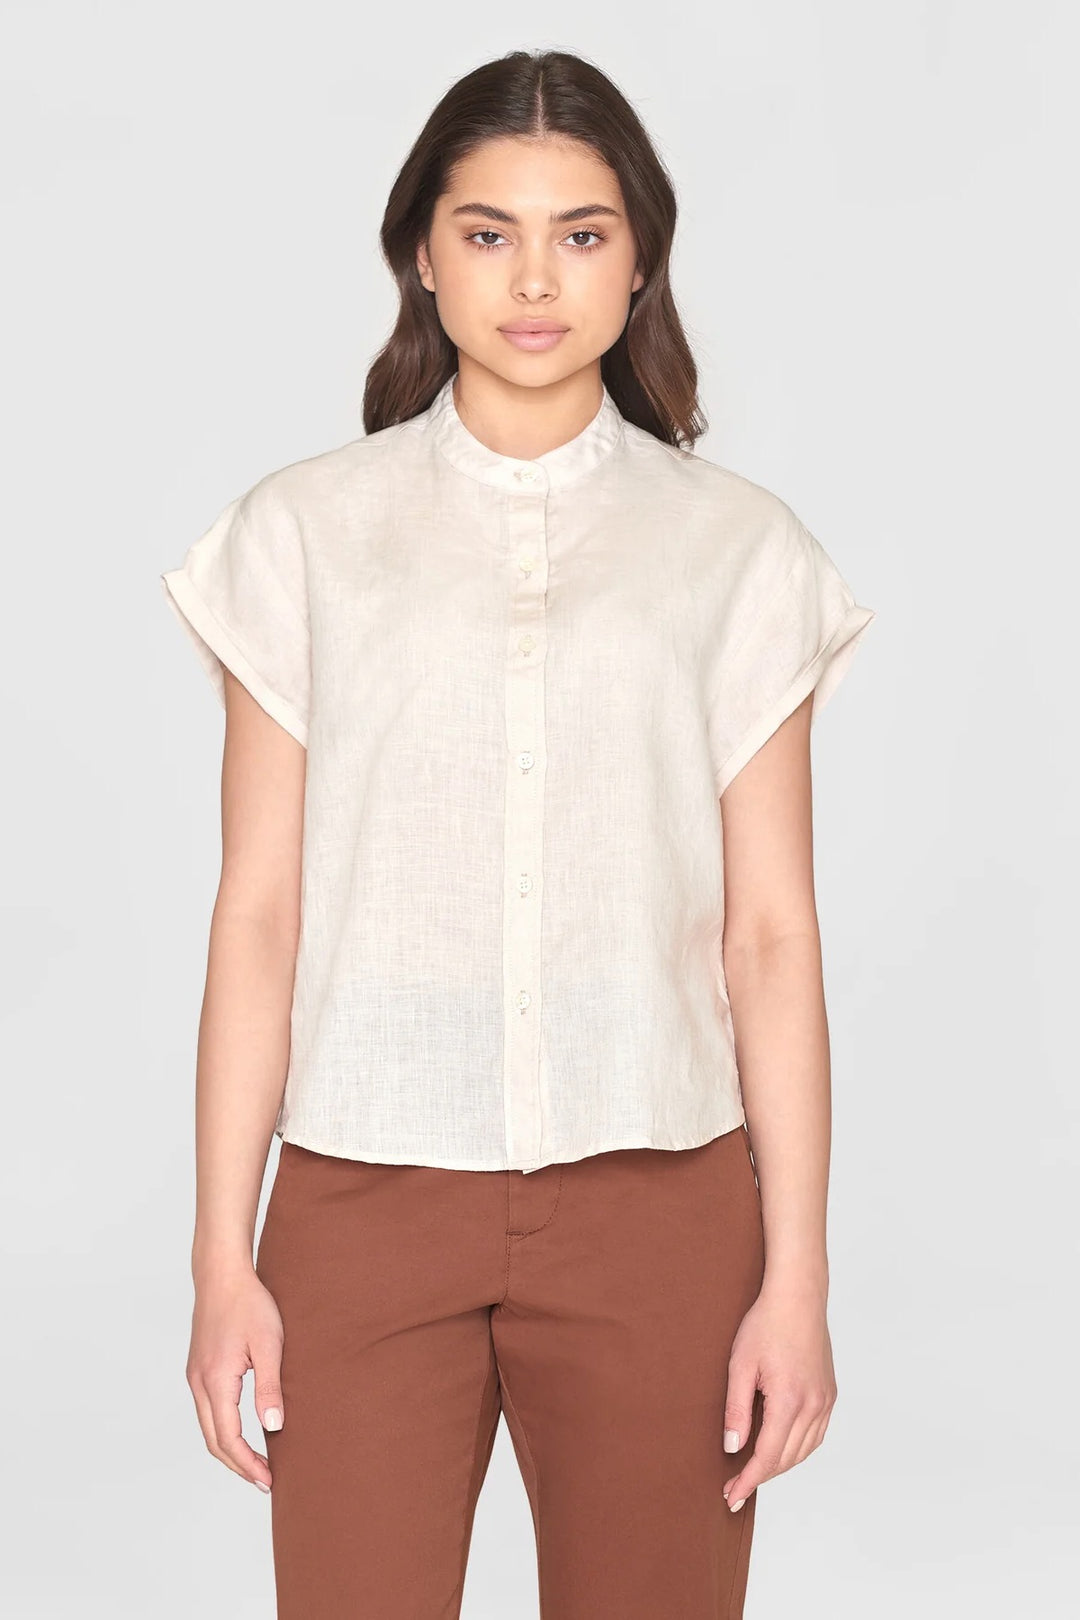 COLLAR Linen Shirt | KNOWLEDGE COTTON APPAREL